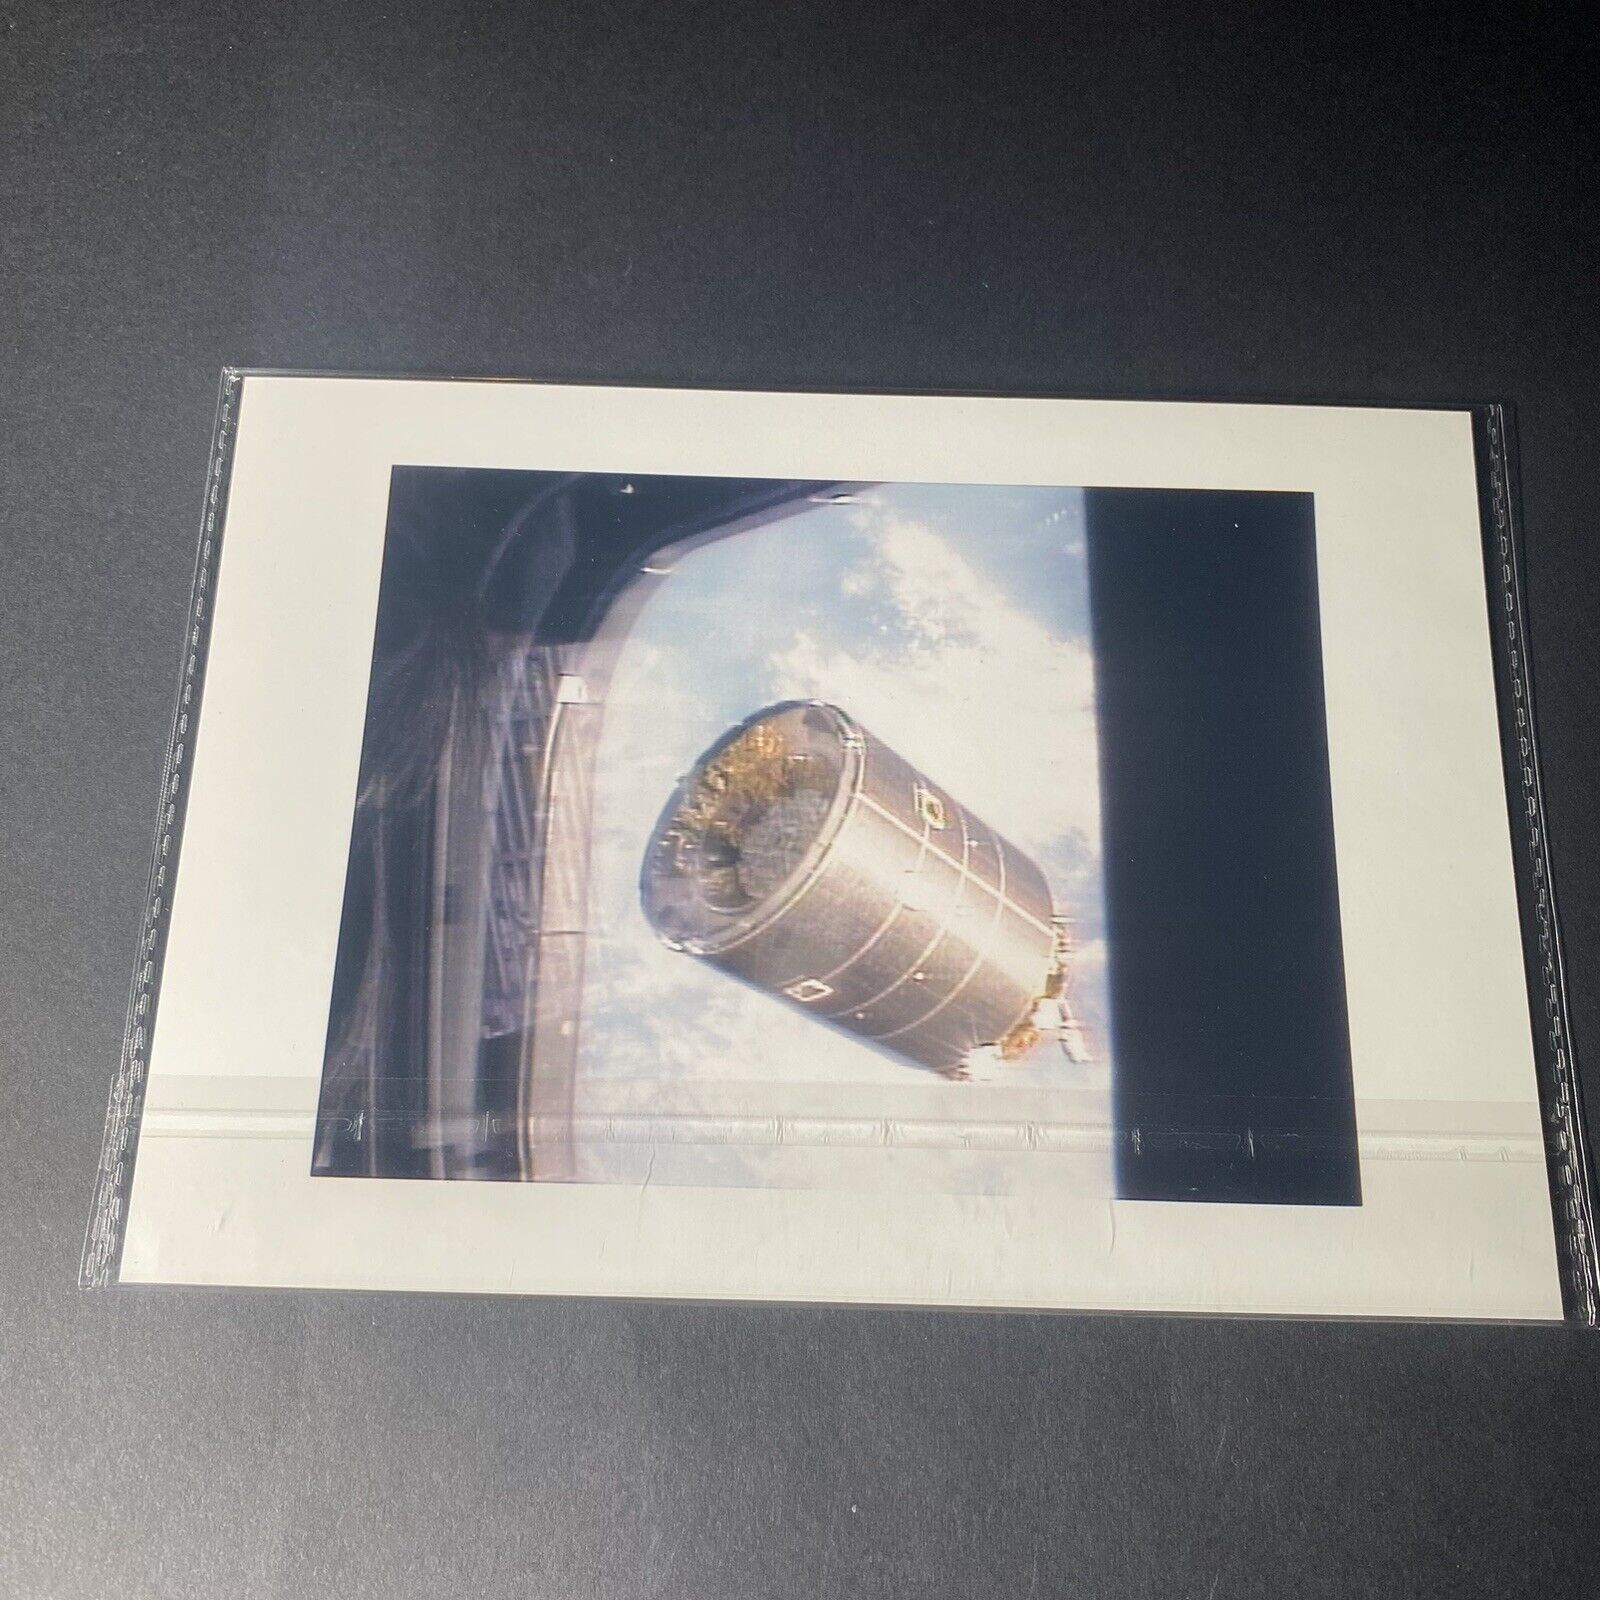 Official NASA Sony Photo 1992 STS-49 Intelsat VI Satellite Space Shuttle Window